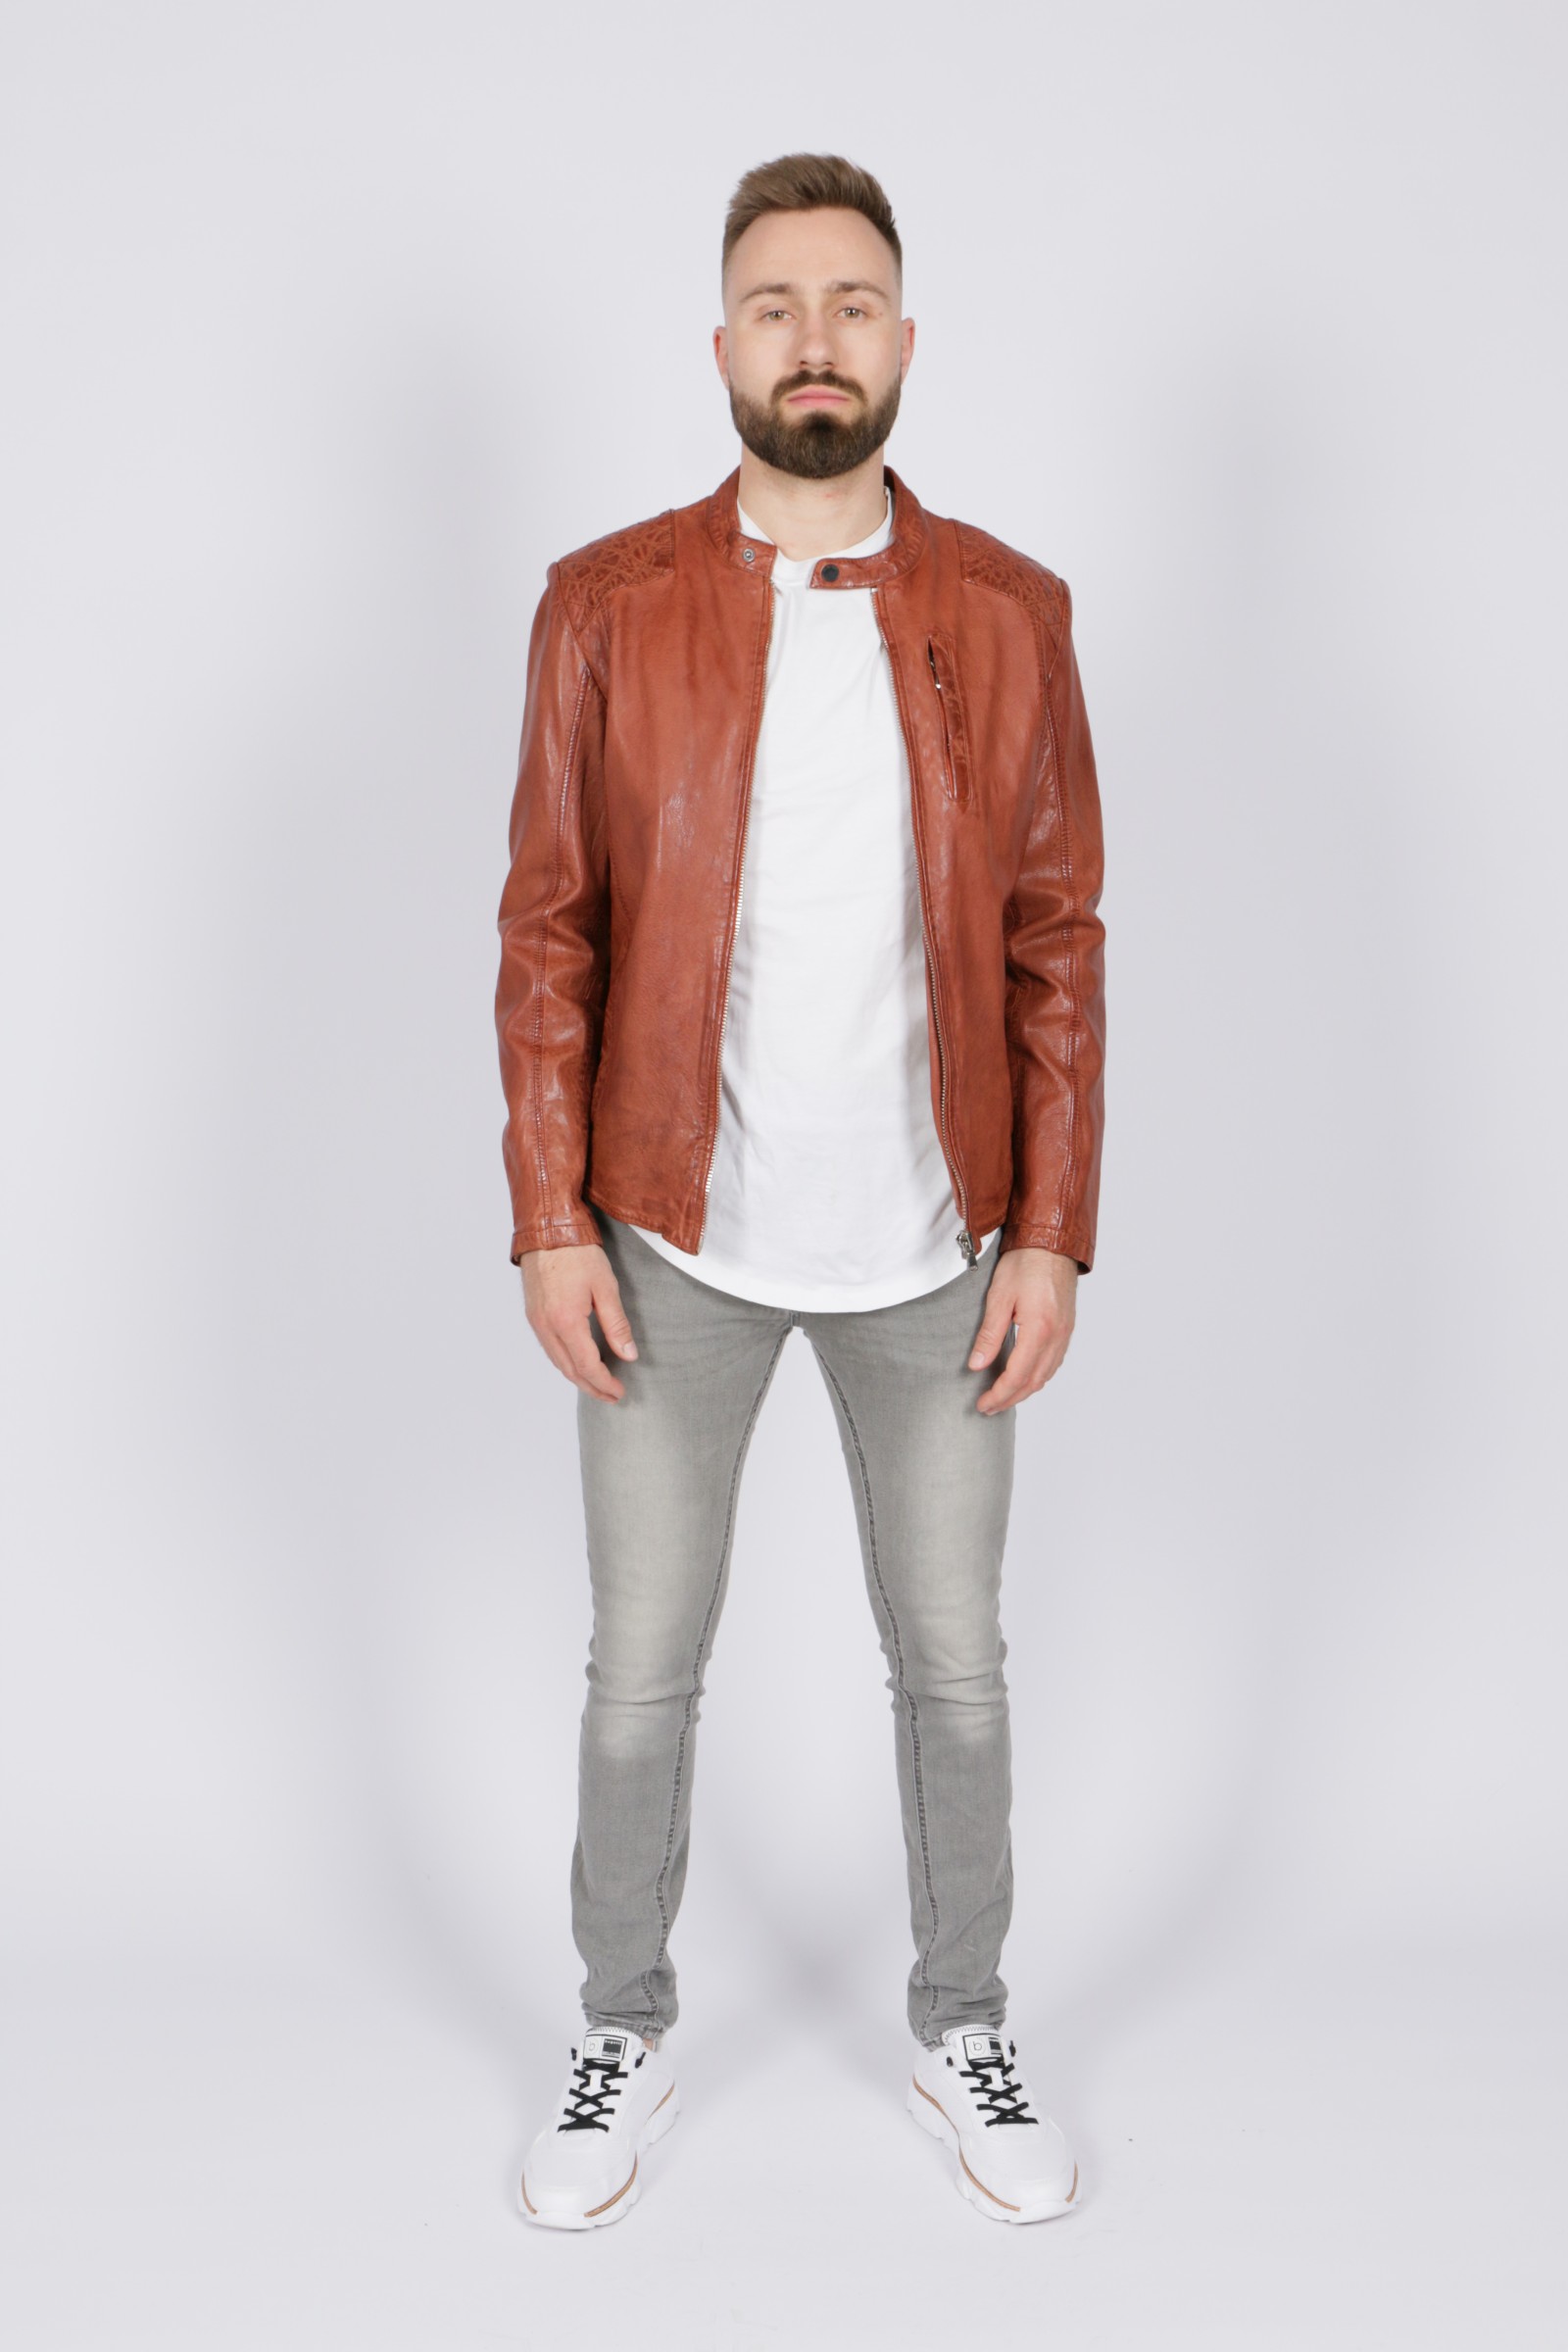 Kiano-FN | Leather Jackets | Men | Freaky Nation